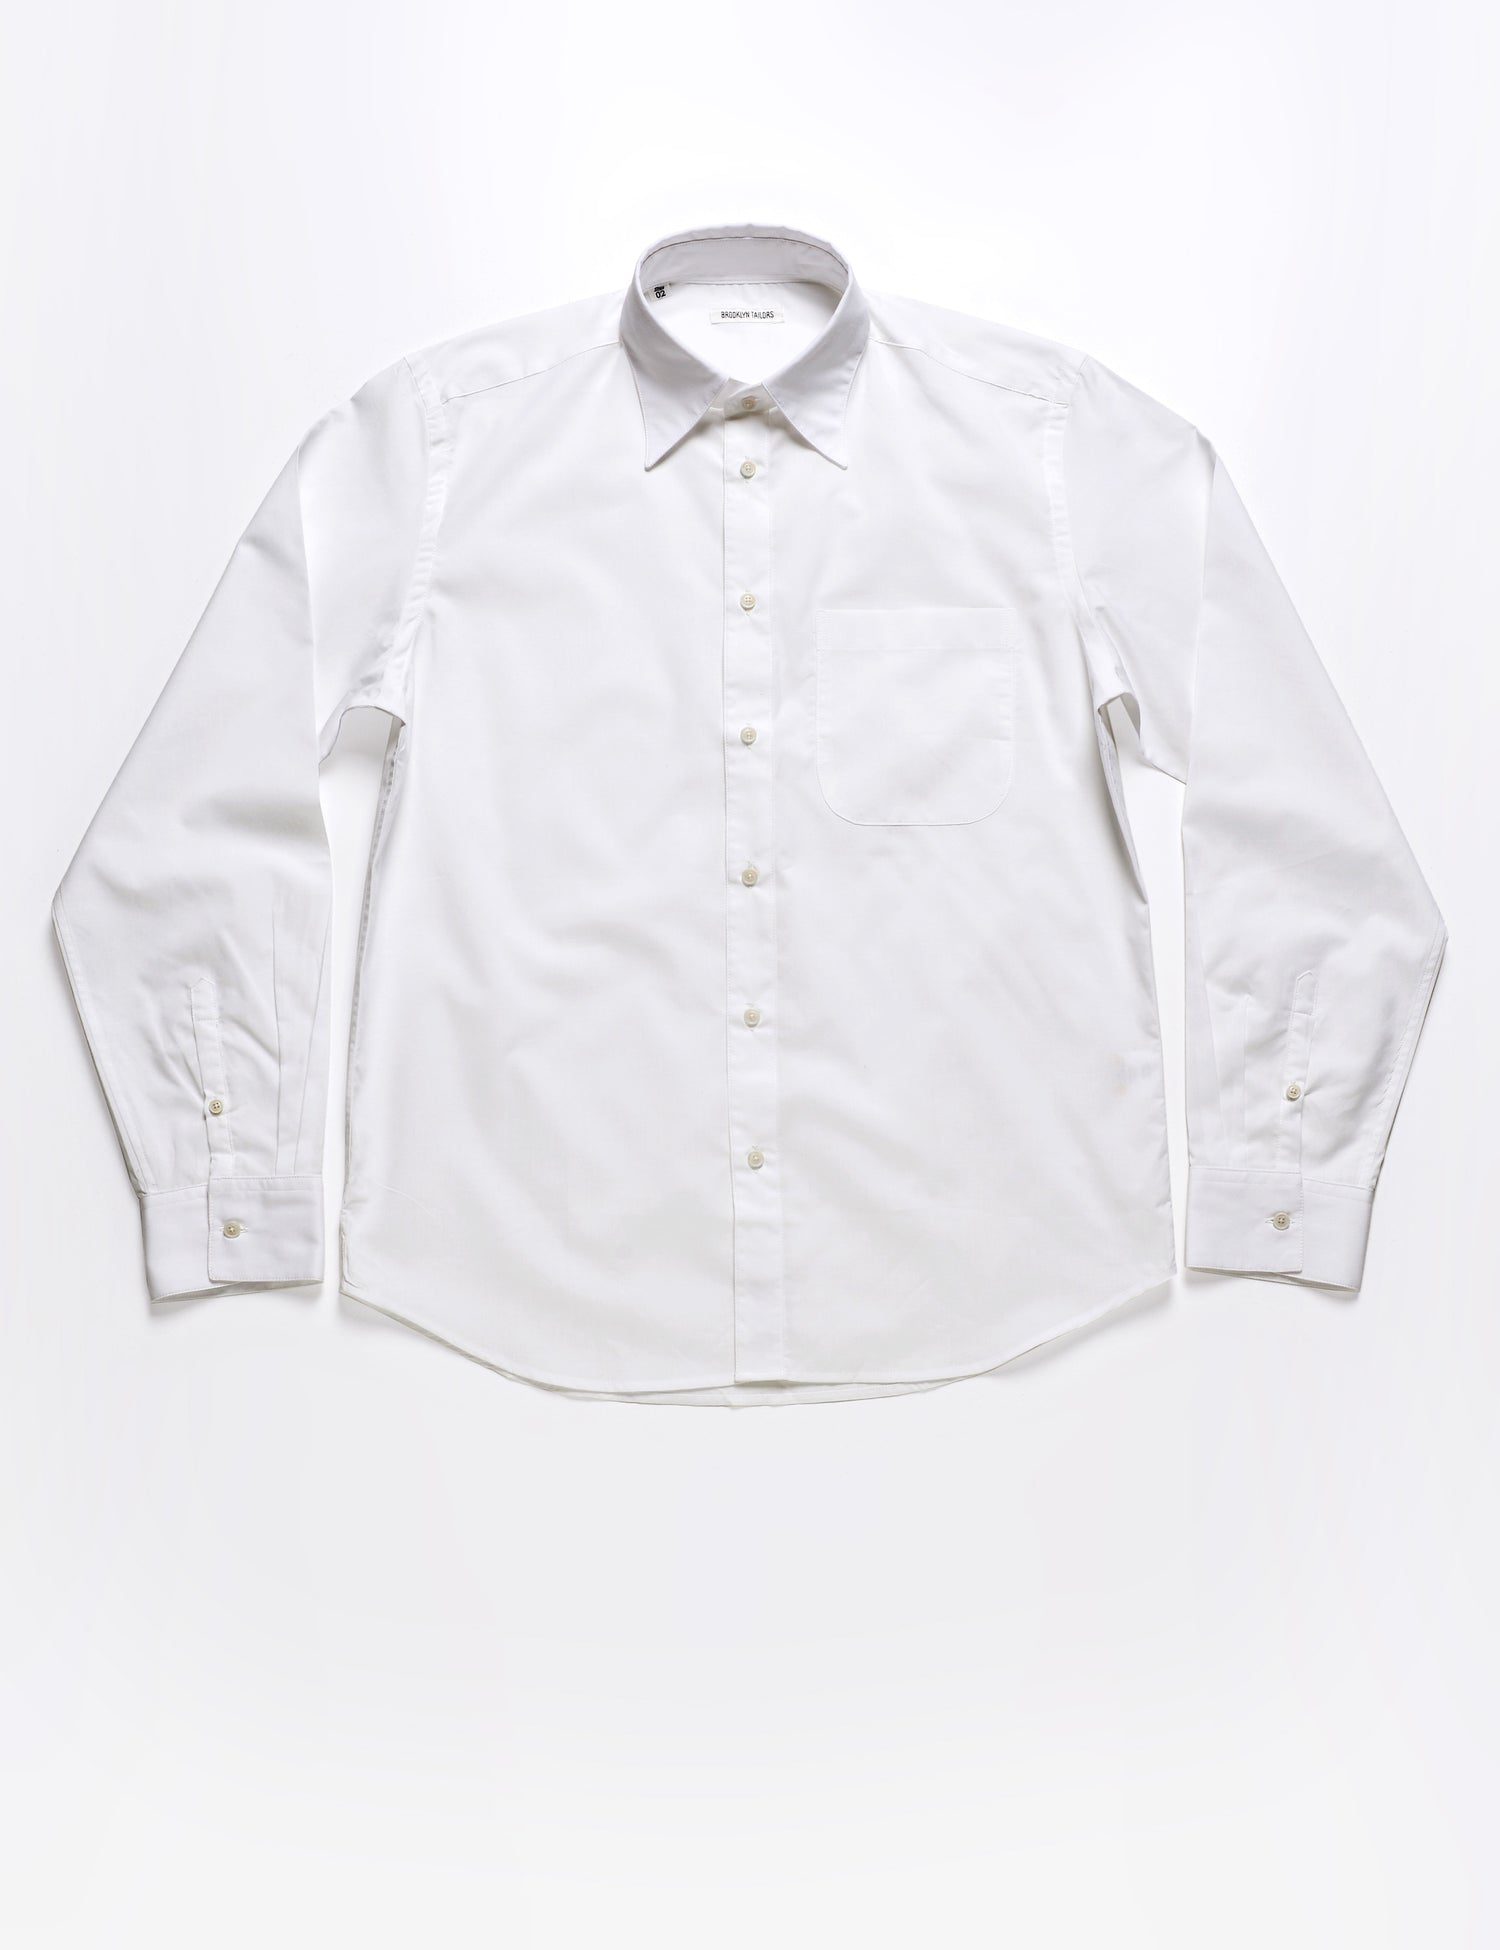 Brooklyn Tailors BKT14 Relaxed Shirt in Cotton Silk - White full length flat shot